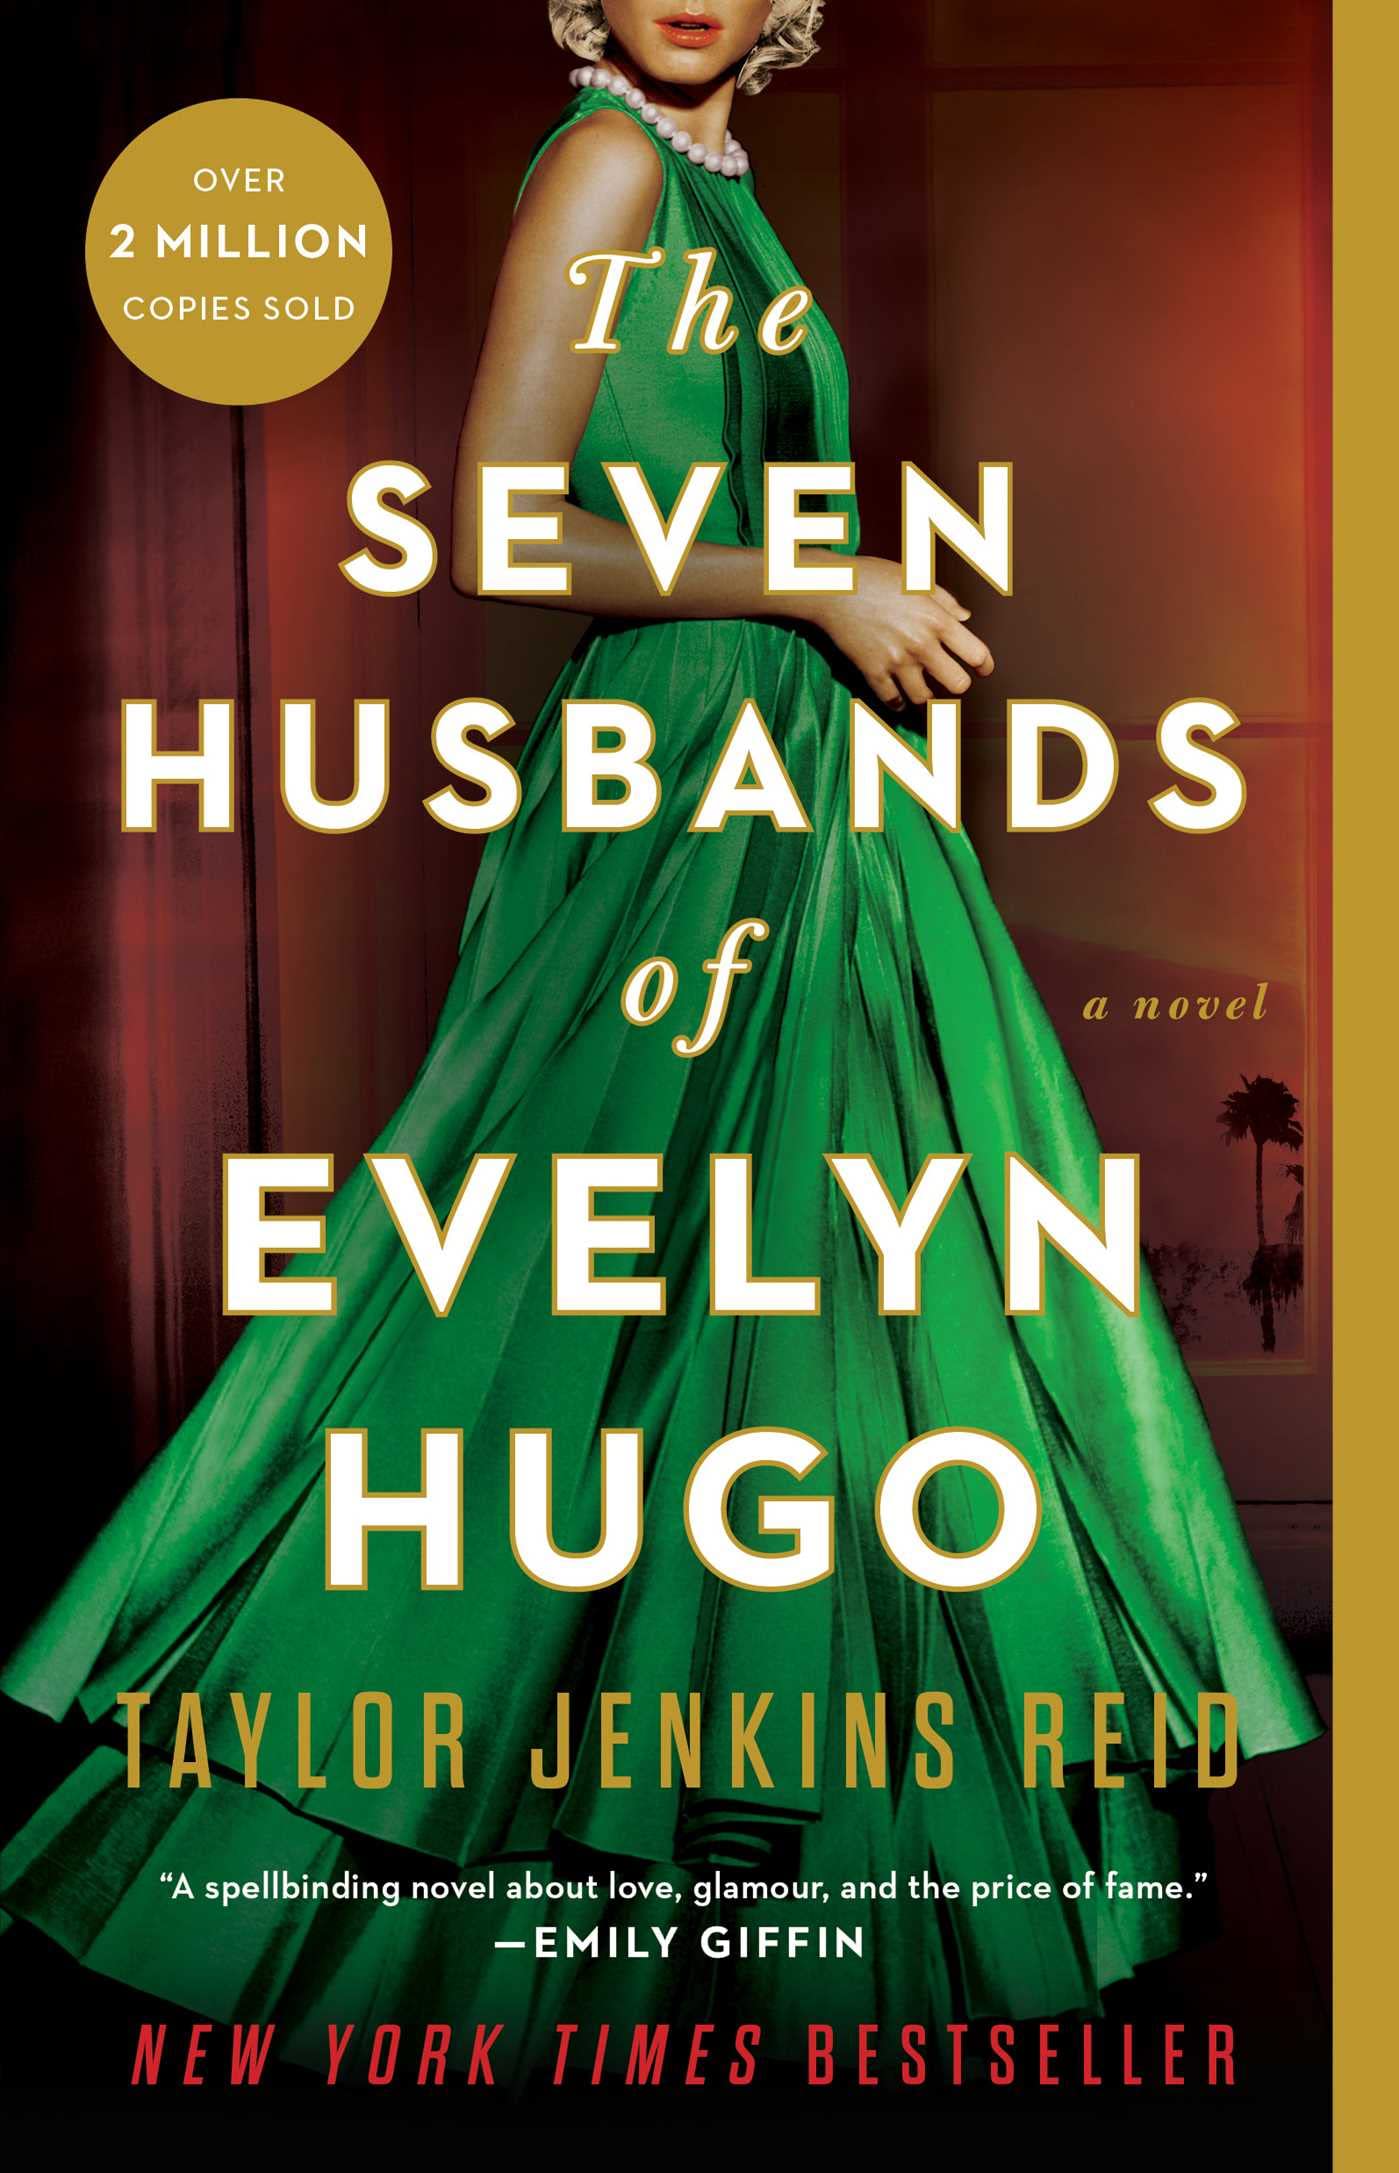 THE SEVEN HUSBAND OF EVELYN HUGO